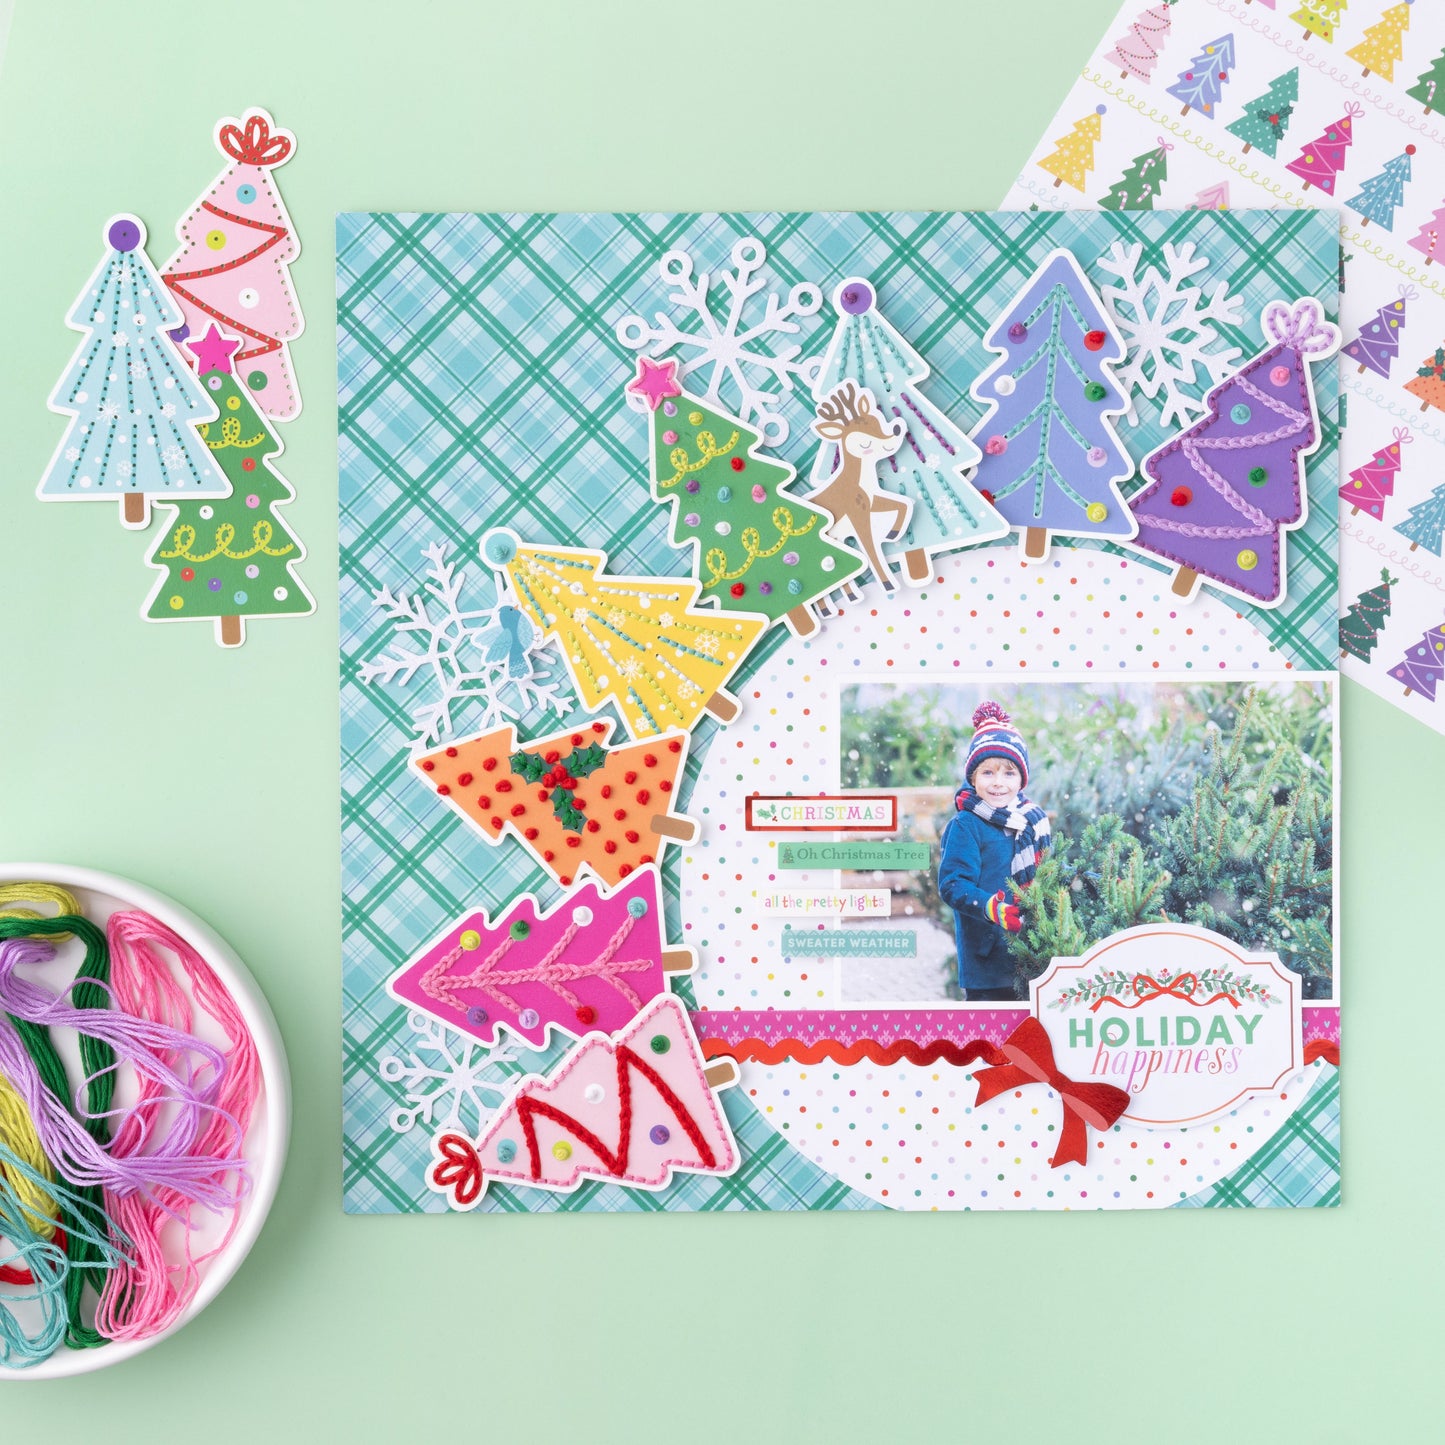 Paige Evans Sugarplum Wishes Embroidery Cross Stitch Kit-Makes 8